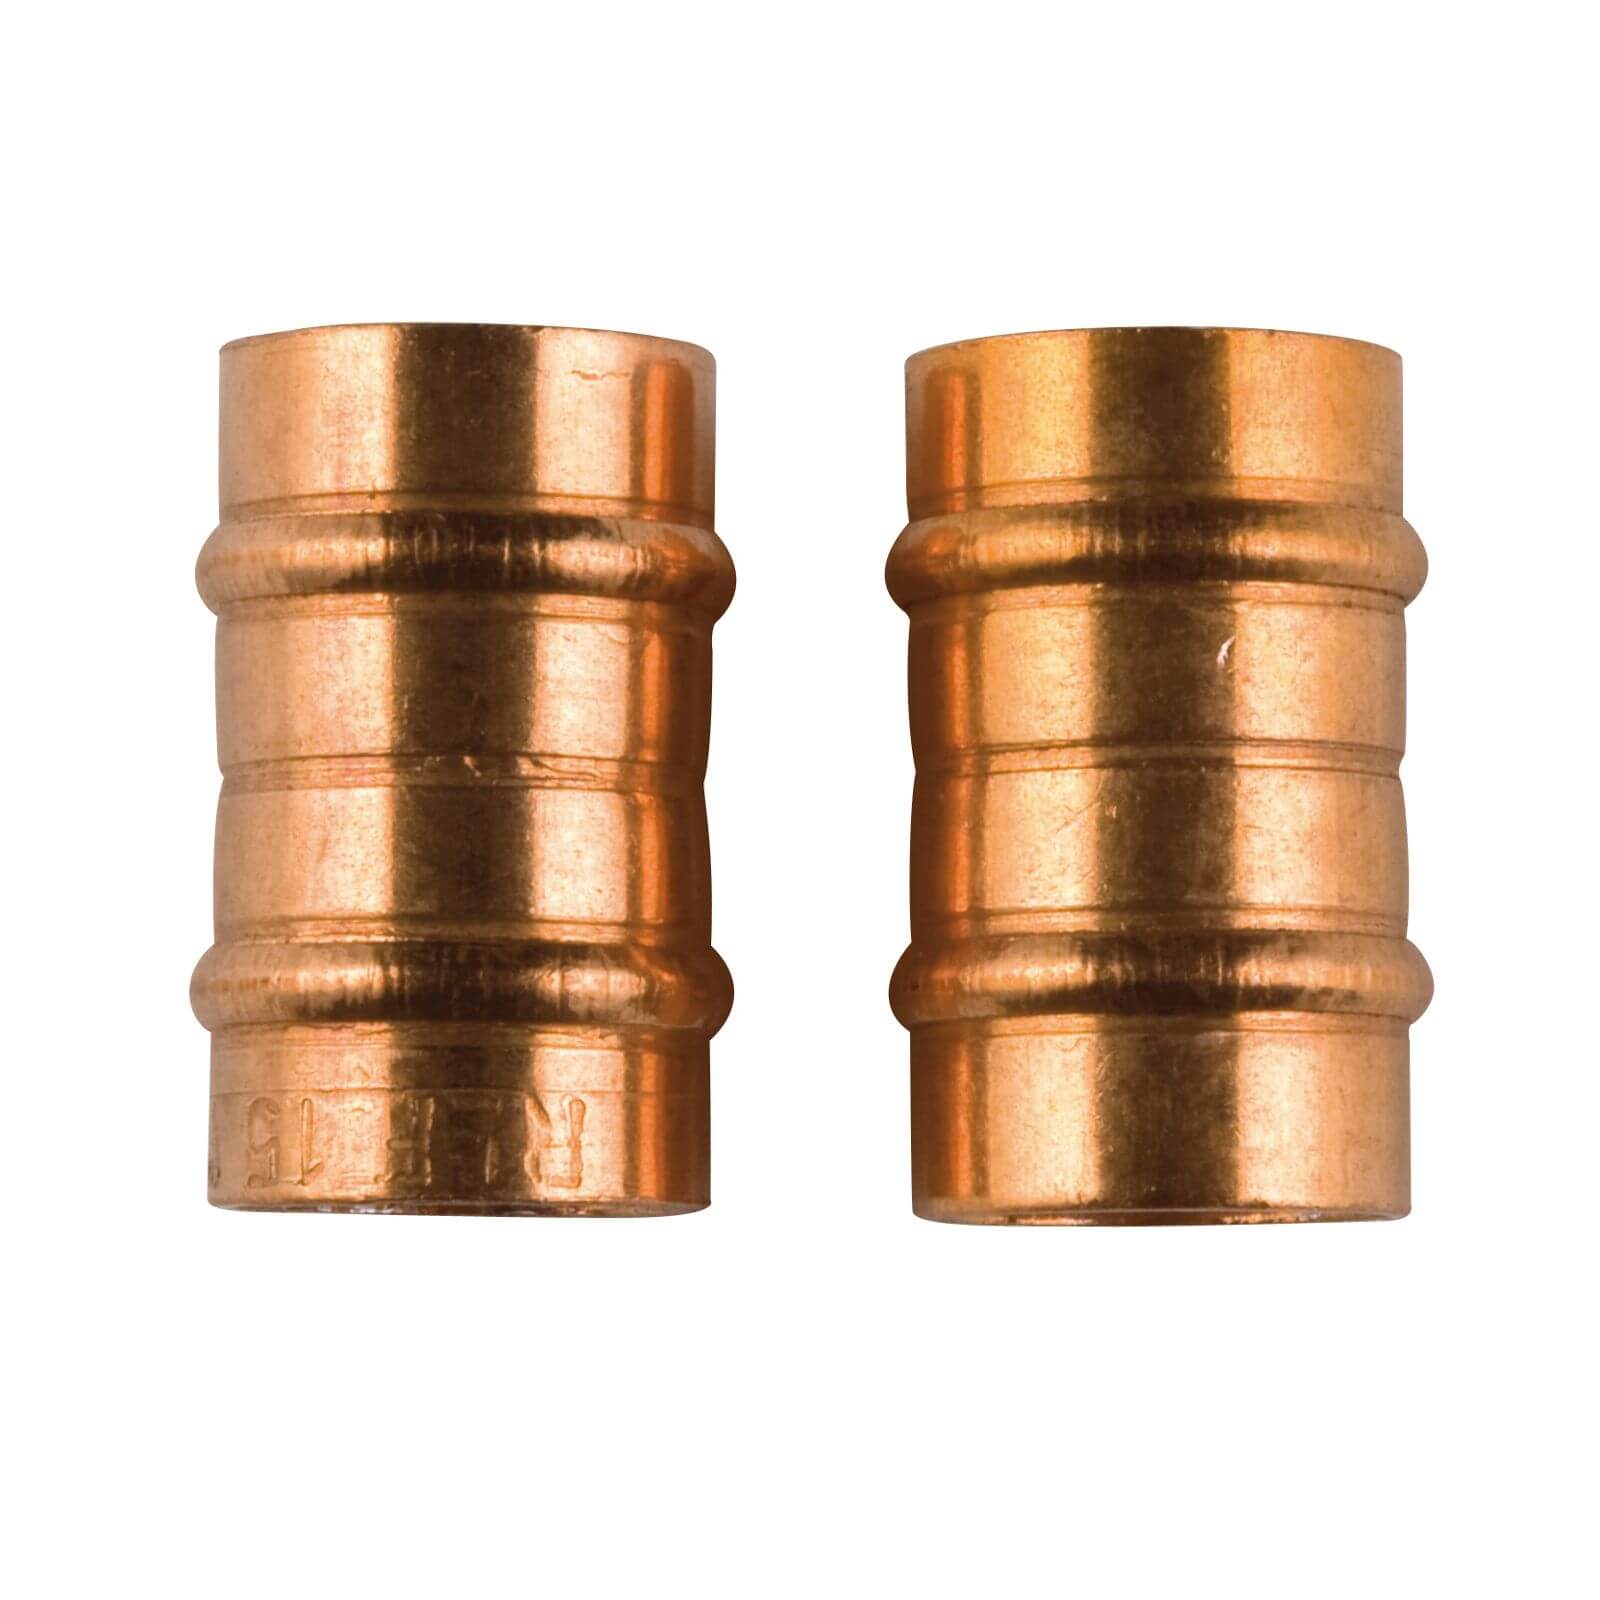 Solder Ring Connector - Copper - 15mm - 2 Pack